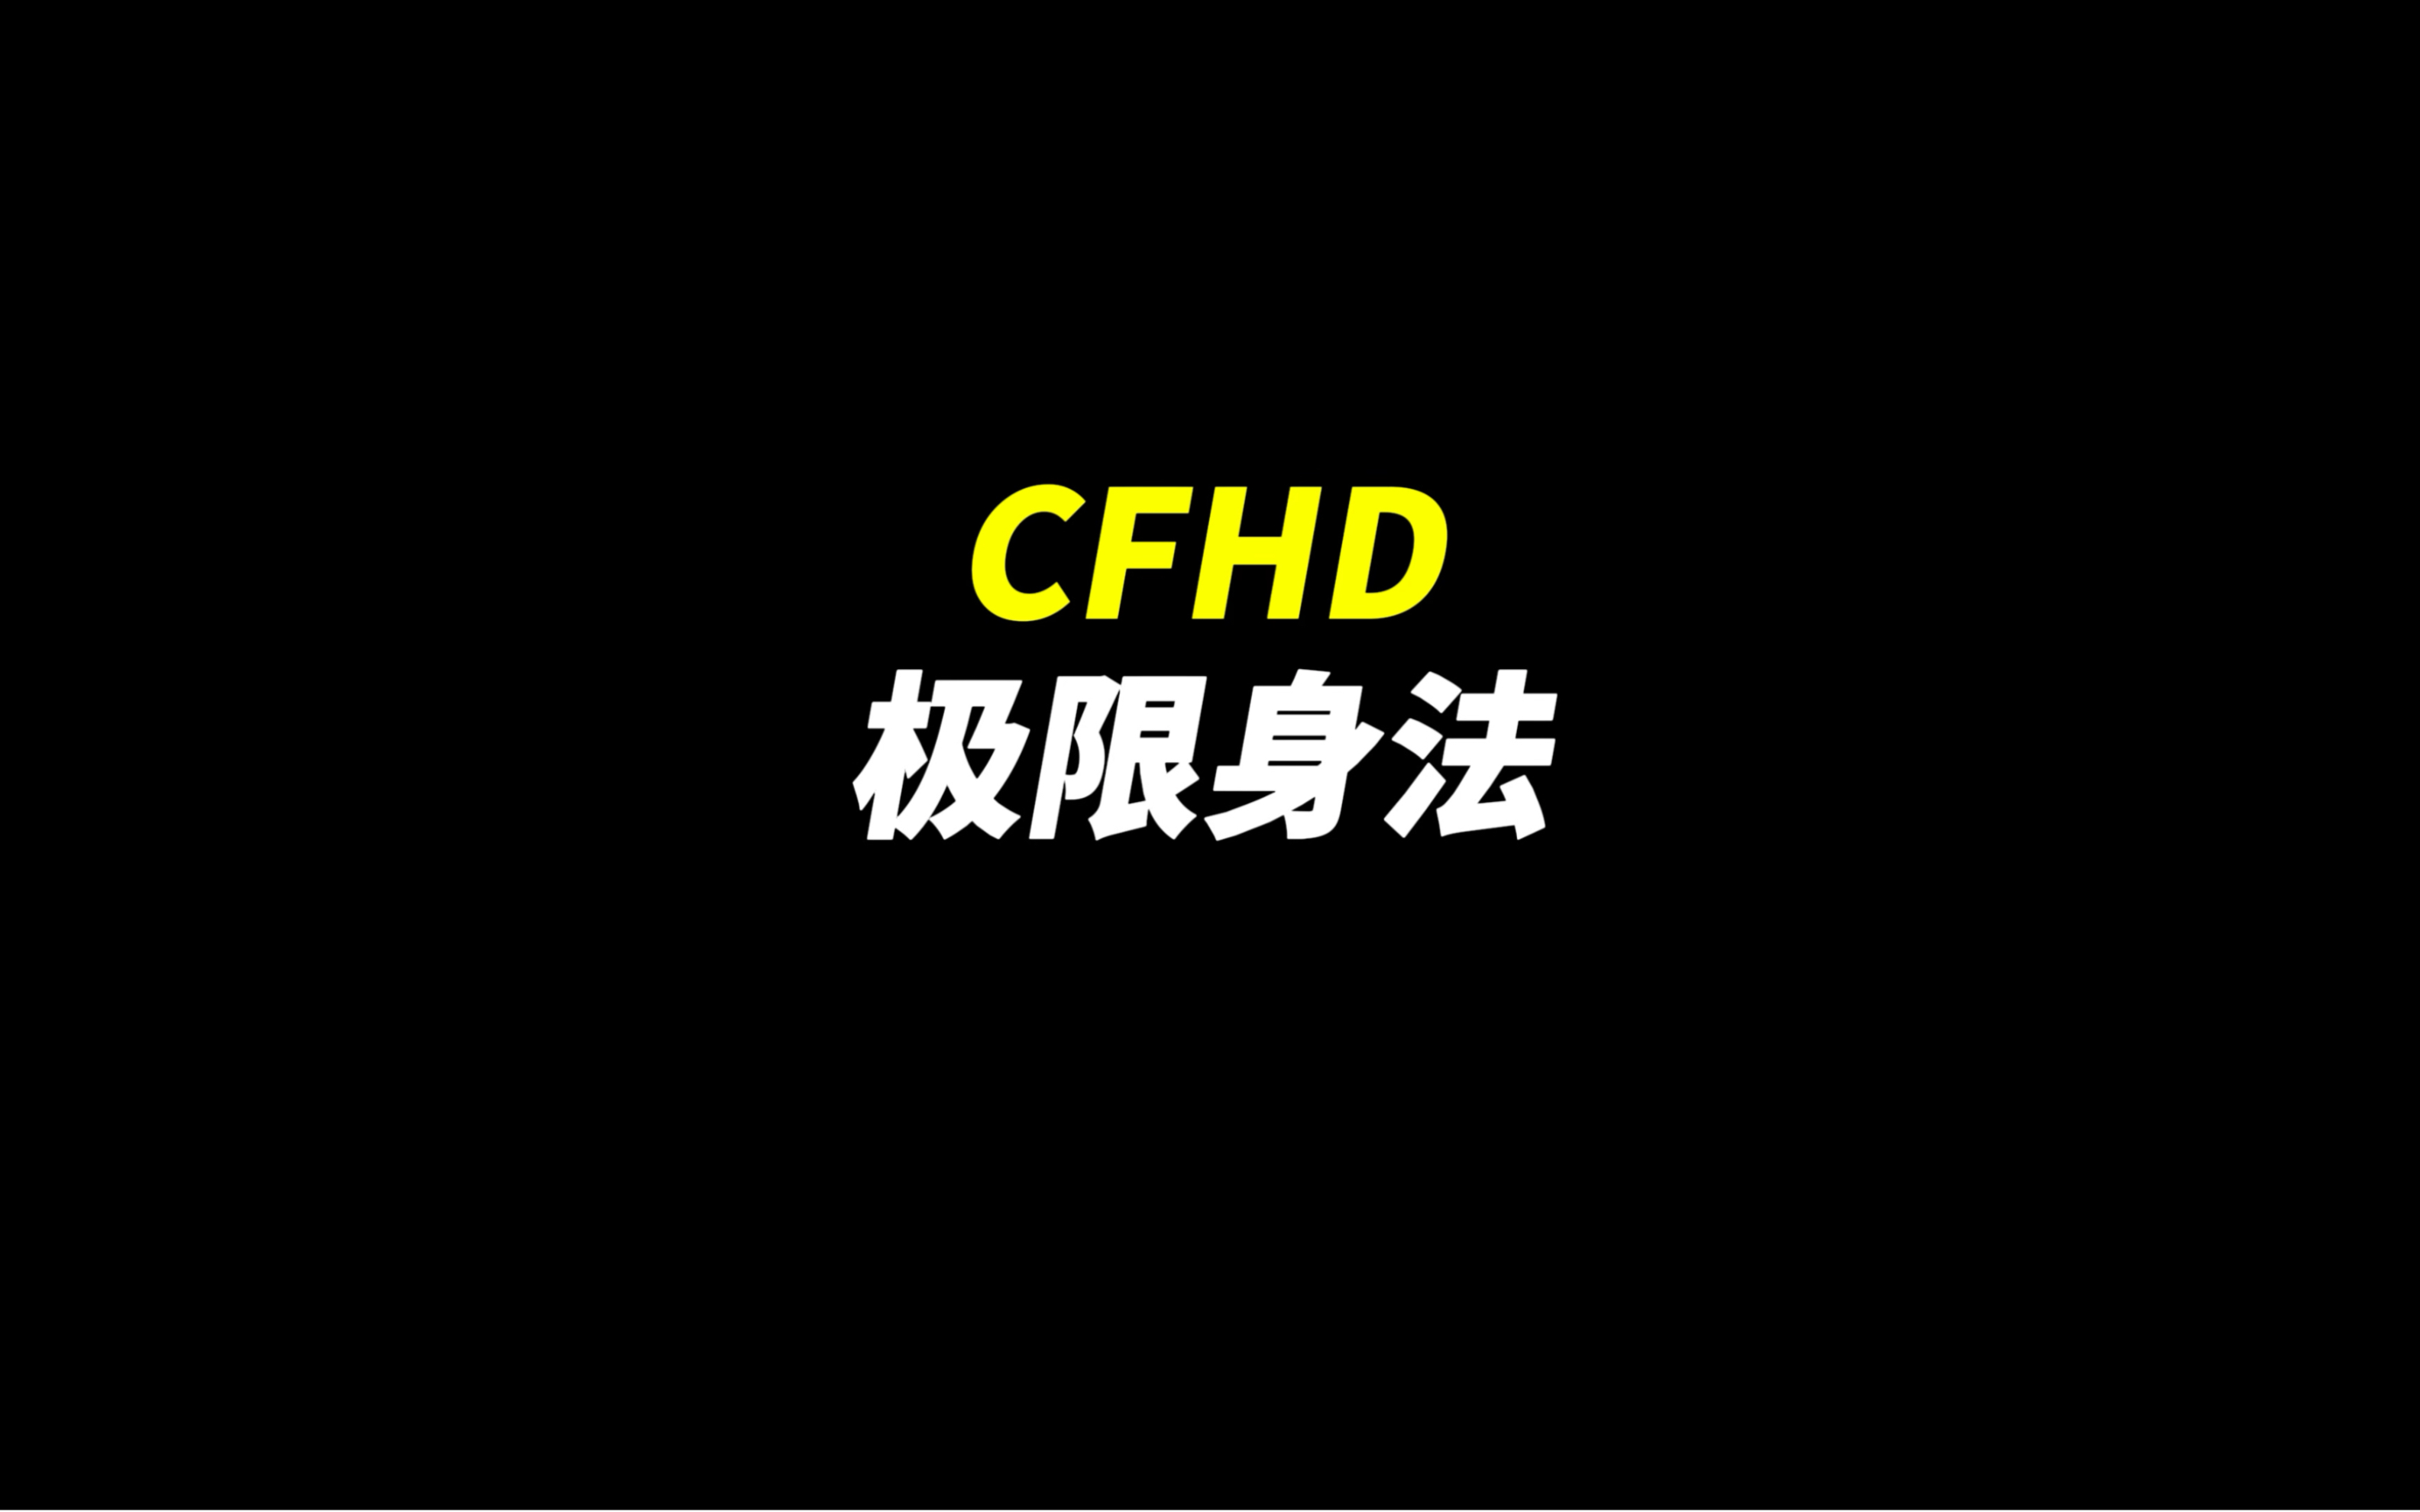 CFHD：《极限身法 结尾有彩蛋》